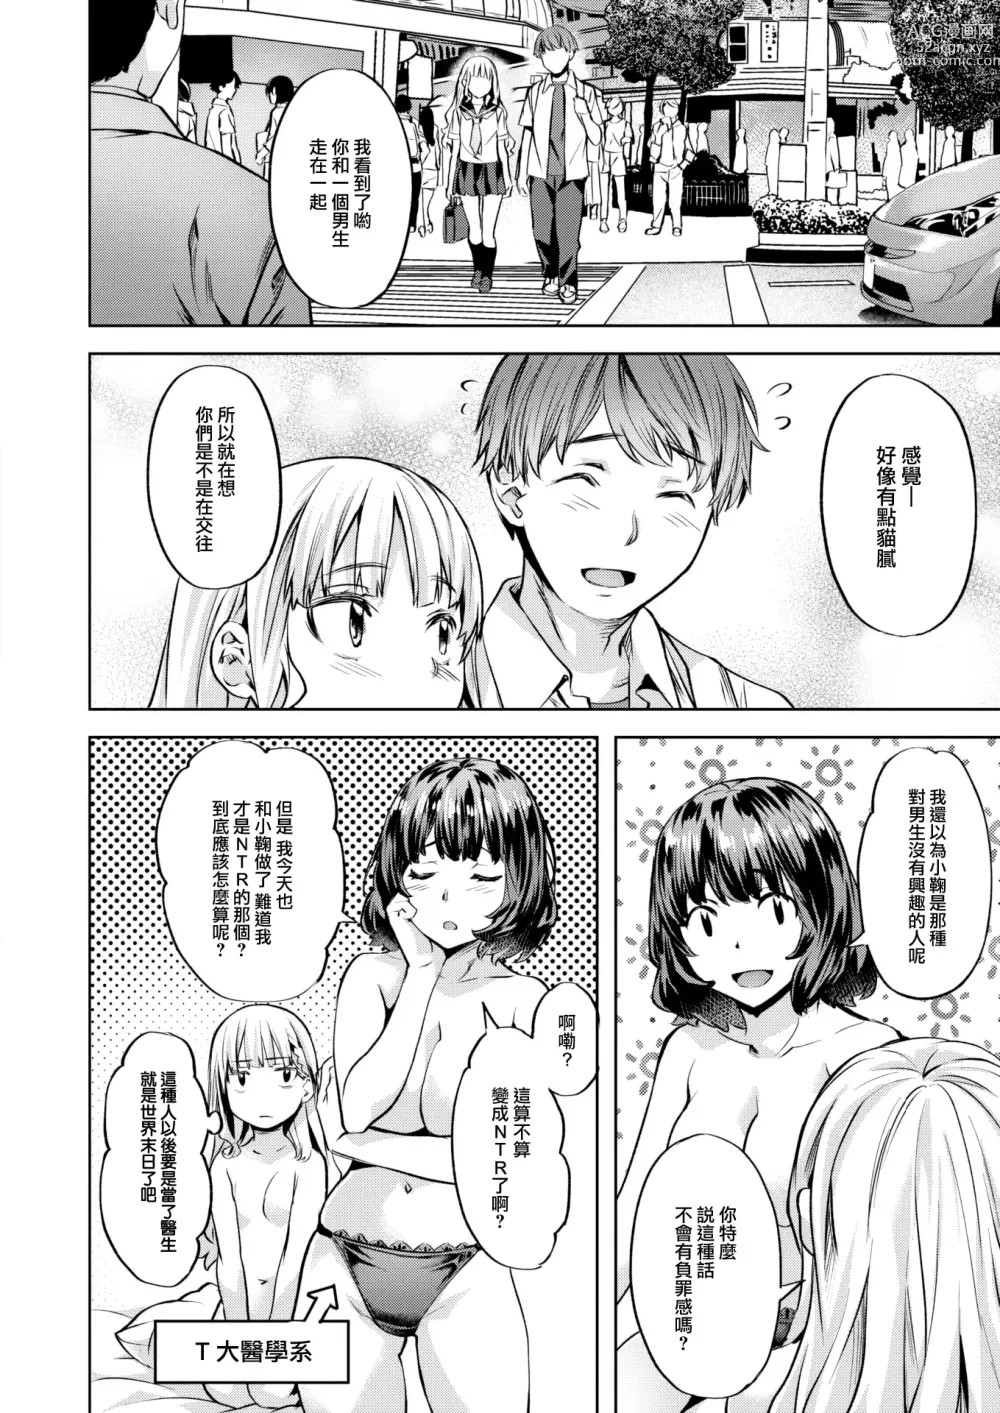 Page 7 of manga Komari Step -step1-